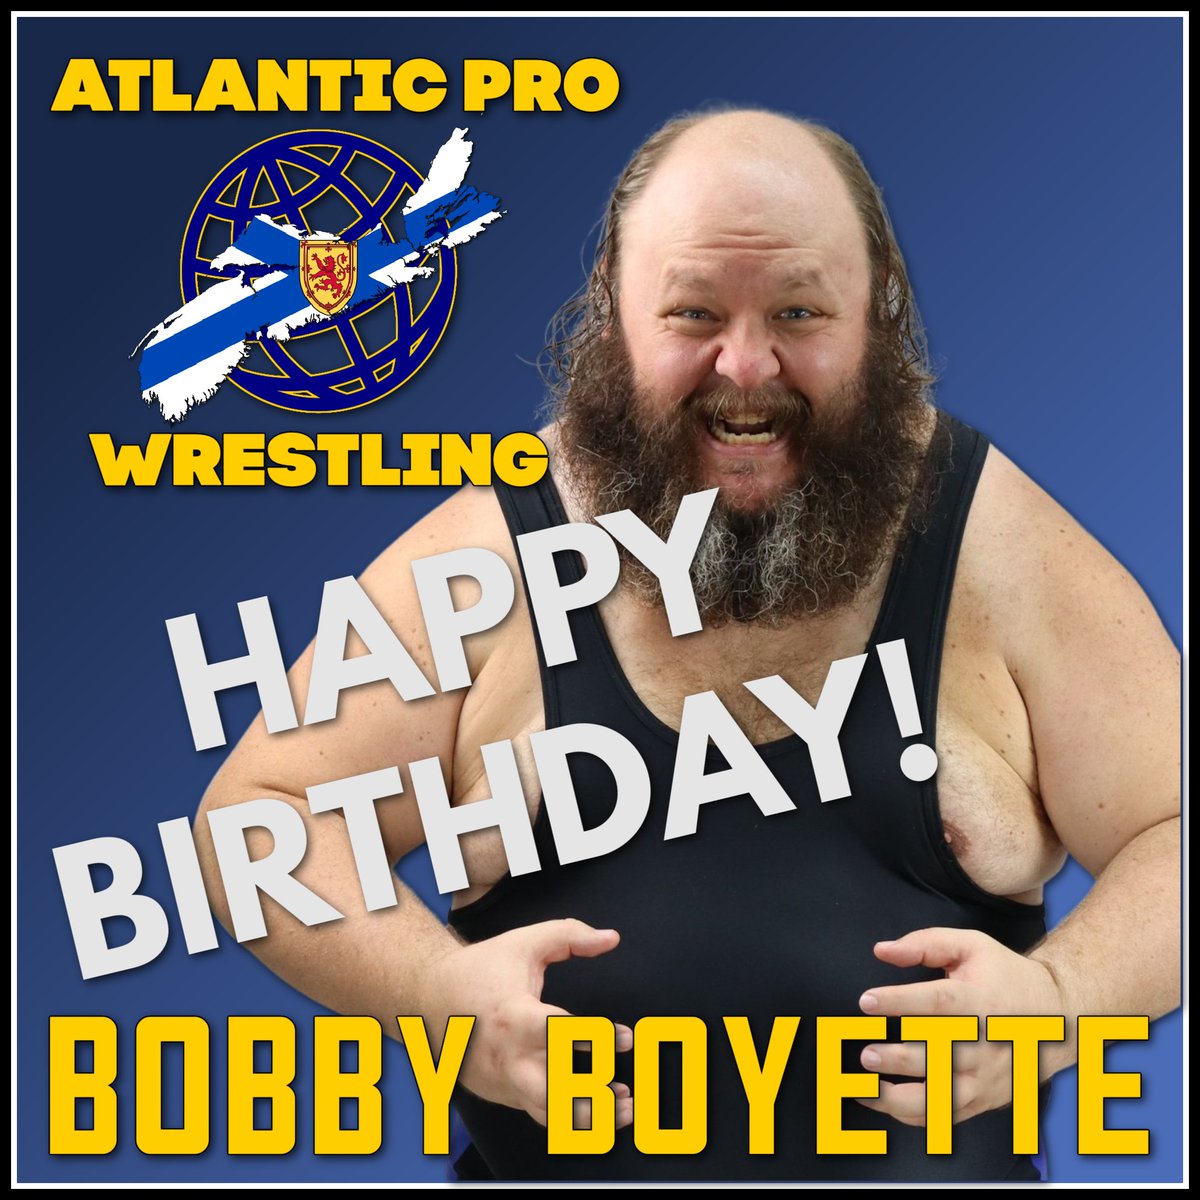 Atlantic Pro Wrestling would like to wish Bobby Boyette a very happy birthday! 

#prowrestling #indywrestling #supportmaritimewrestling #maritimewrestling #indywrestlingrules #indywrestlers #novascotia